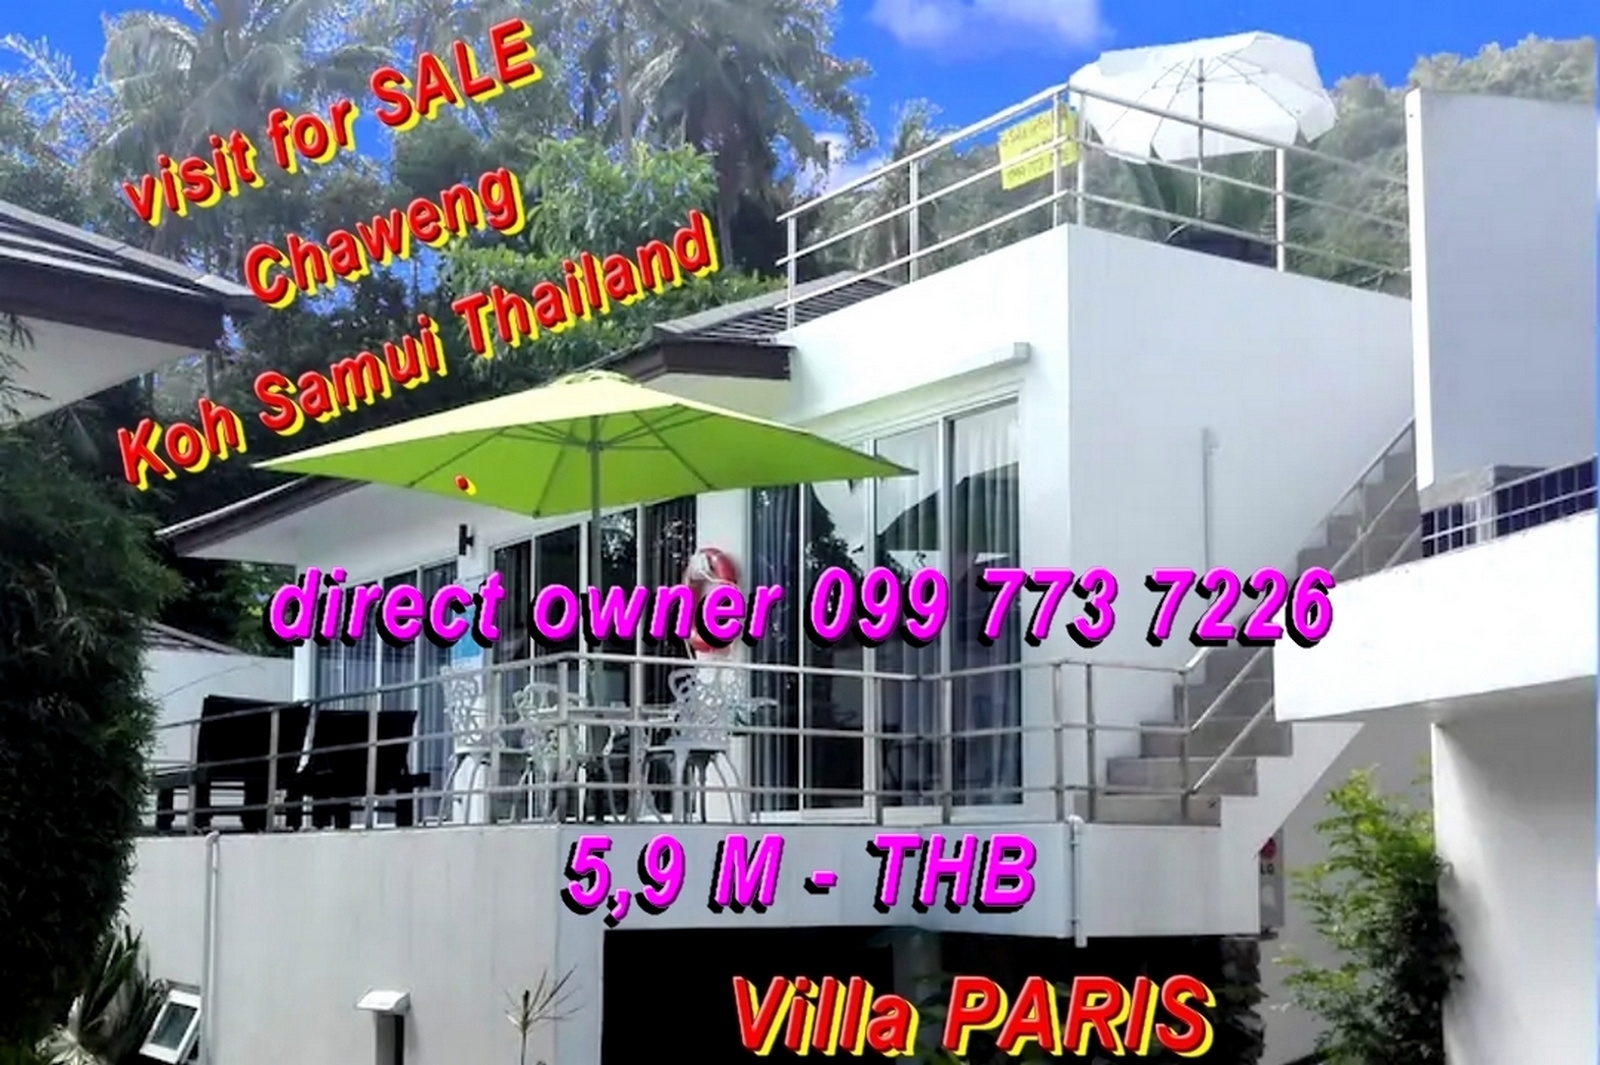 sale direct owner villa Paris pool 3 bedroom buy price -- 5,9 M THB  phone 099 773 7226  